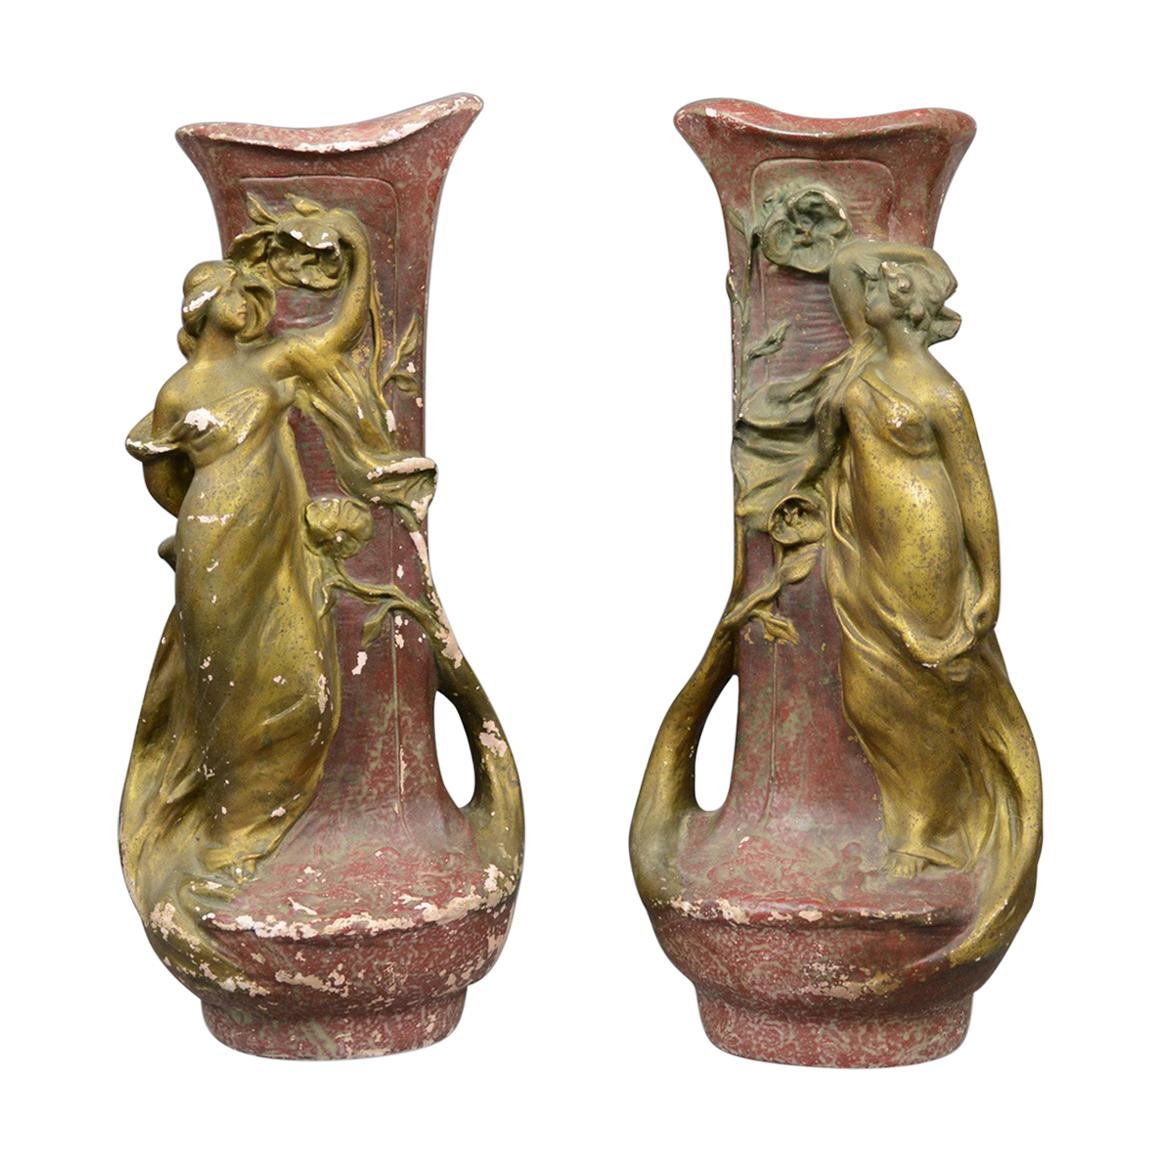 Antique Plaster Vases, French, Art Nouveau, Amphora, Early 20th Century